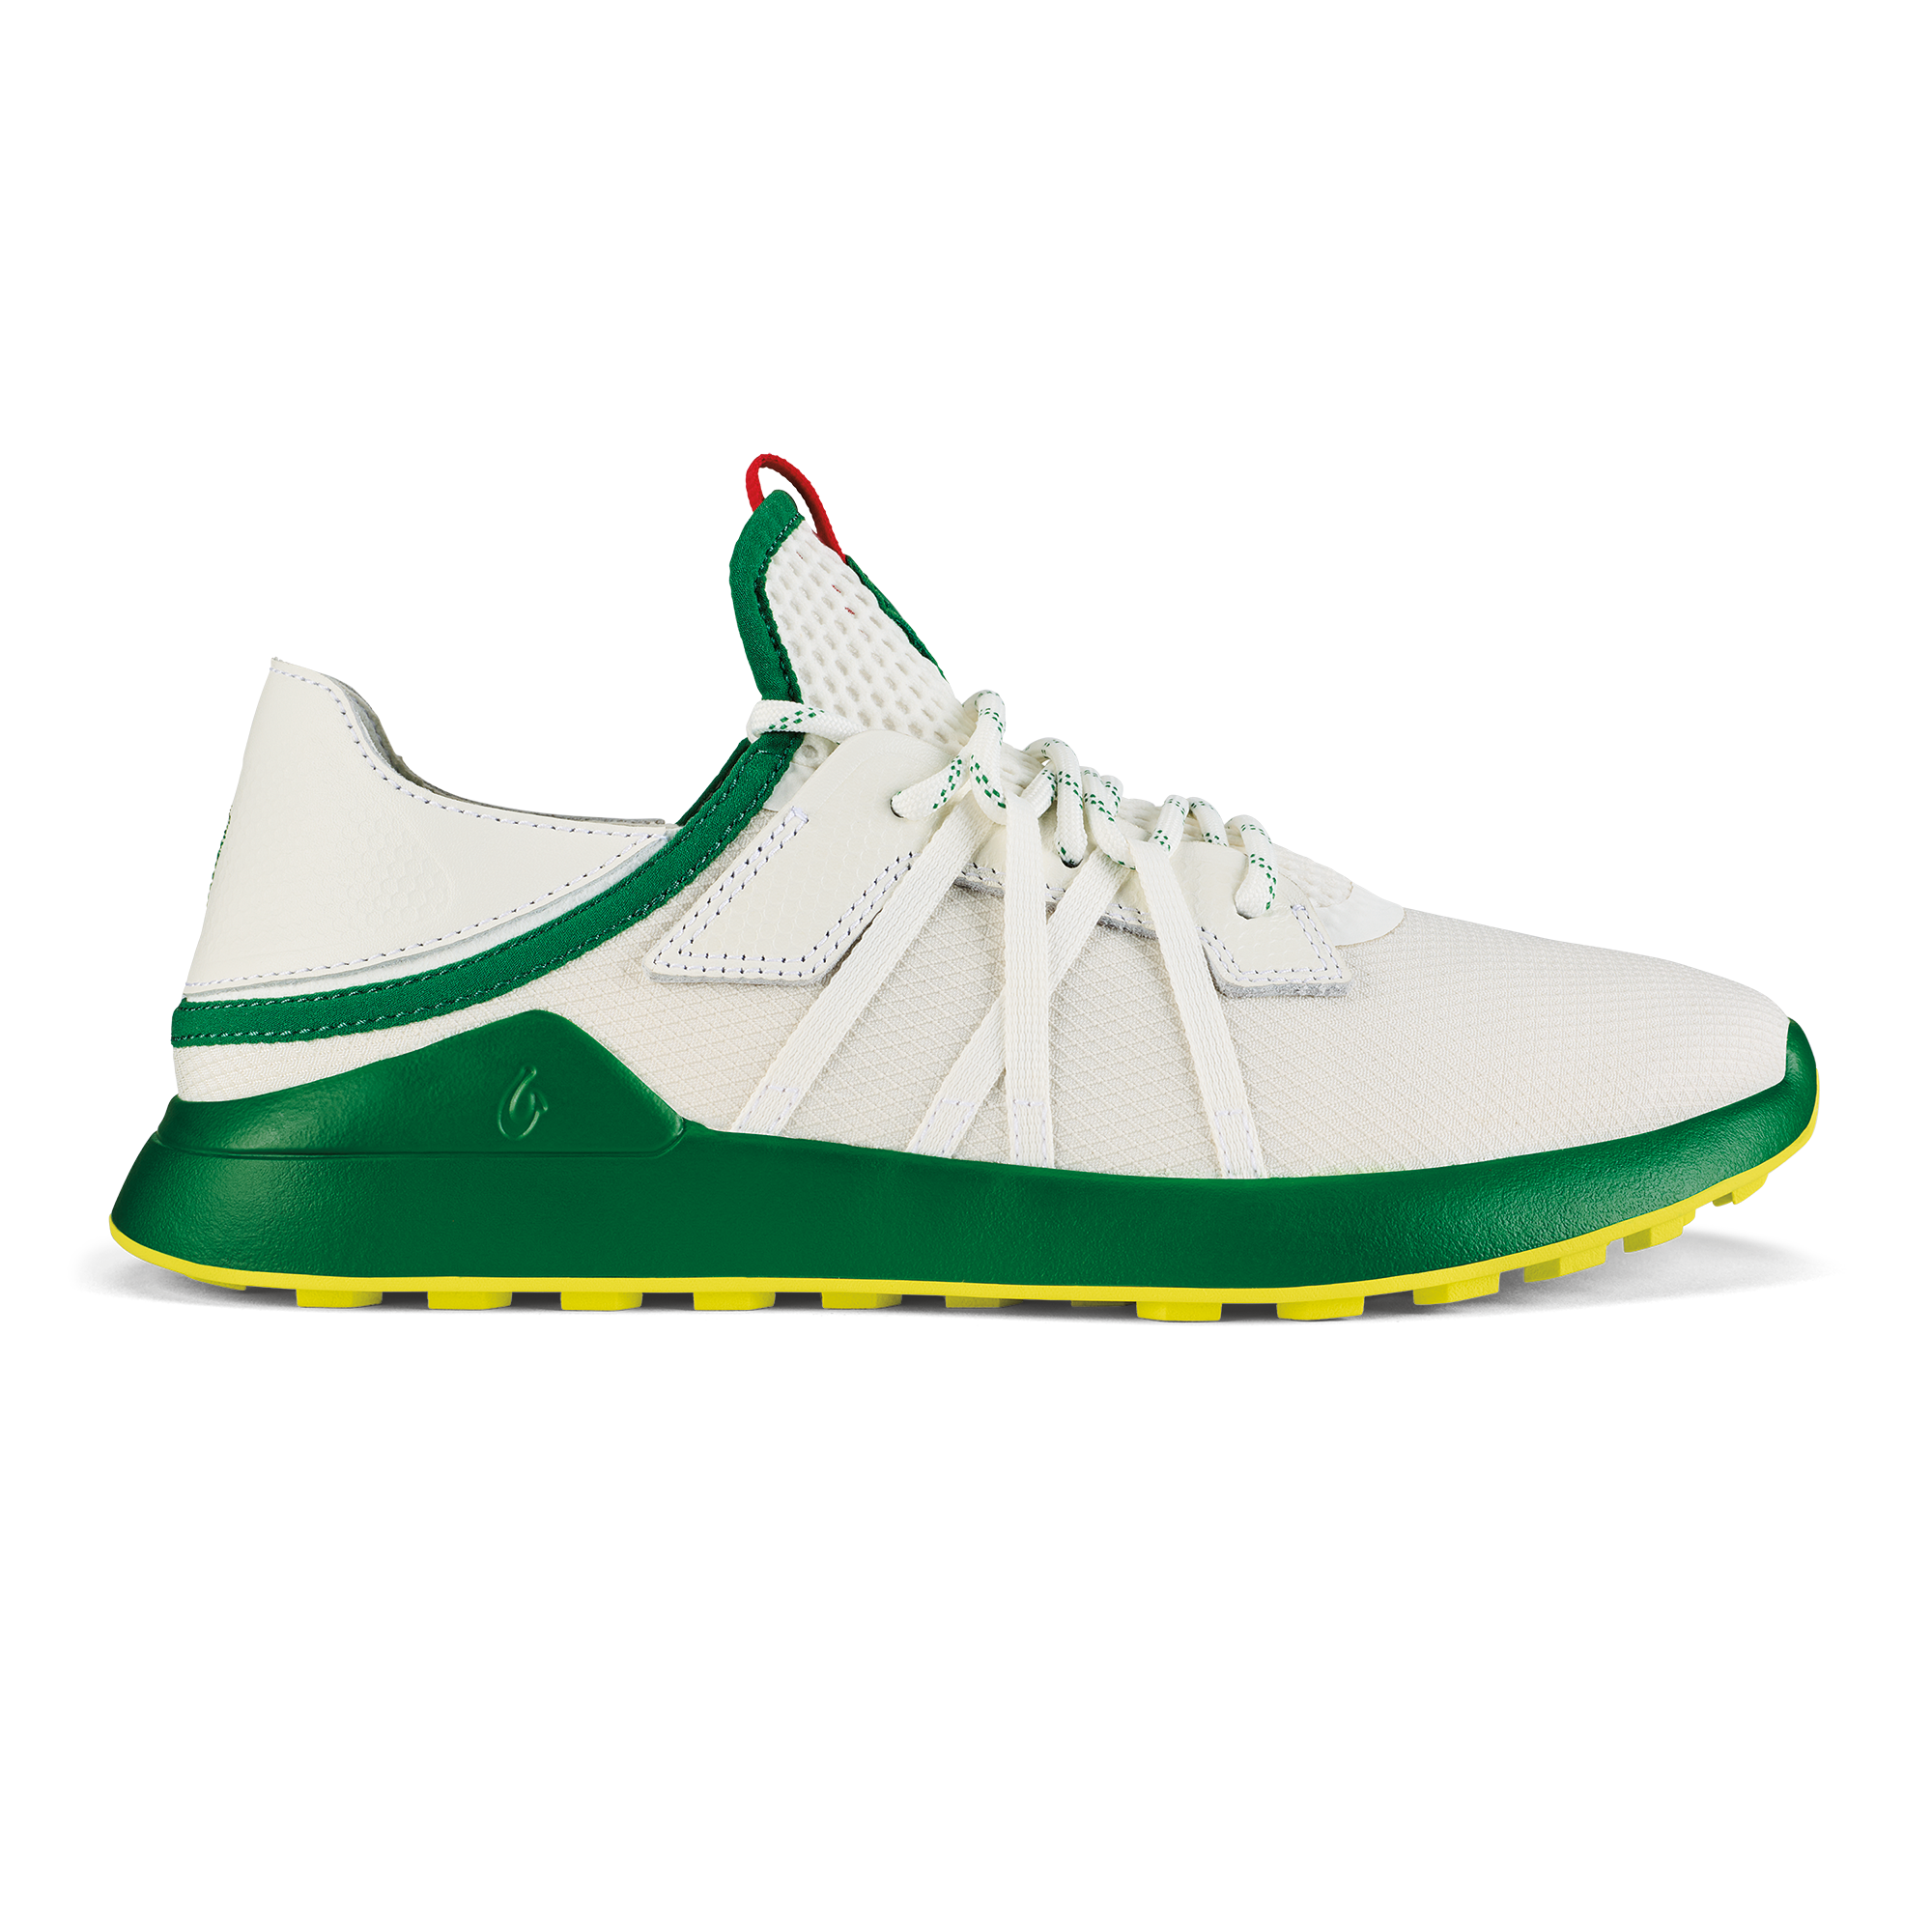 Manele Men’s Breathable Golf Shoes - Bright White / Palm | OluKai